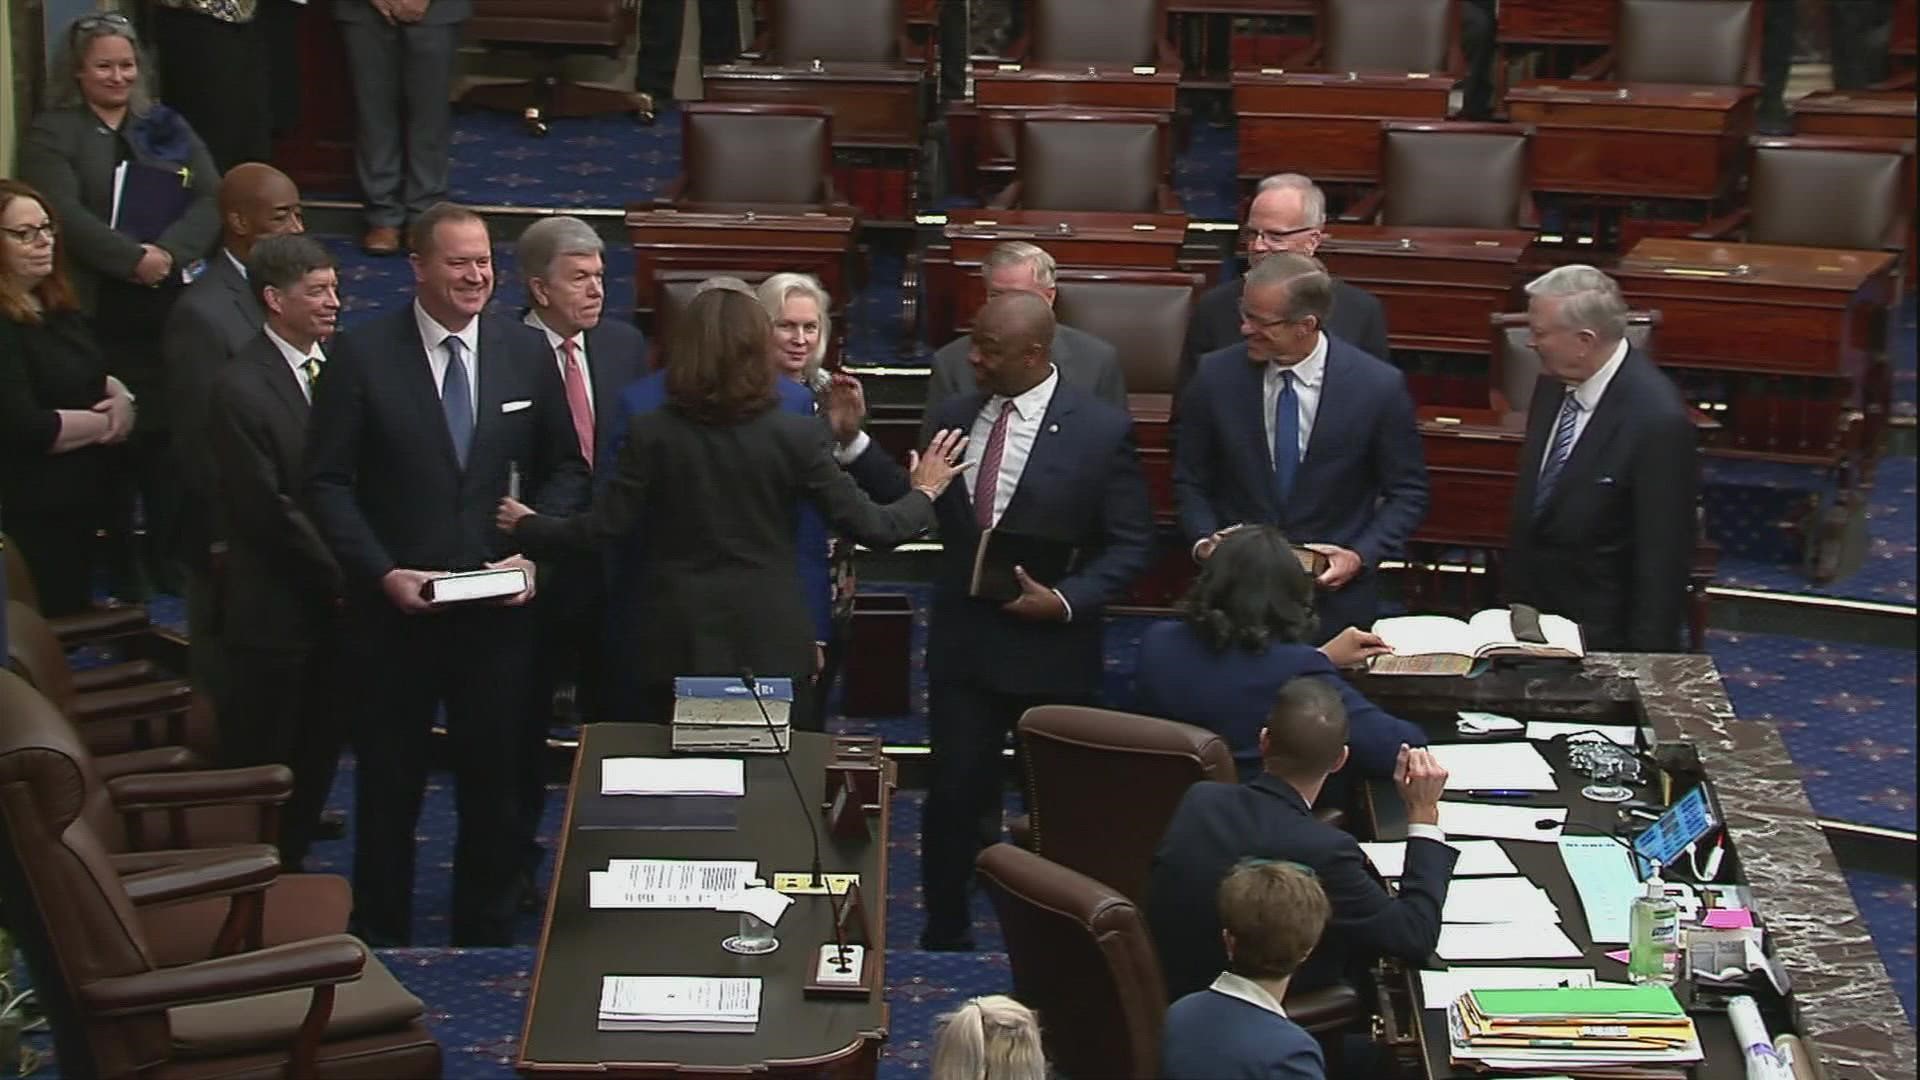 Missouri's newest U.S. Senator was sworn into office today. Republican Eric Schmitt took the oath of office from Vice President Kamala Harris.